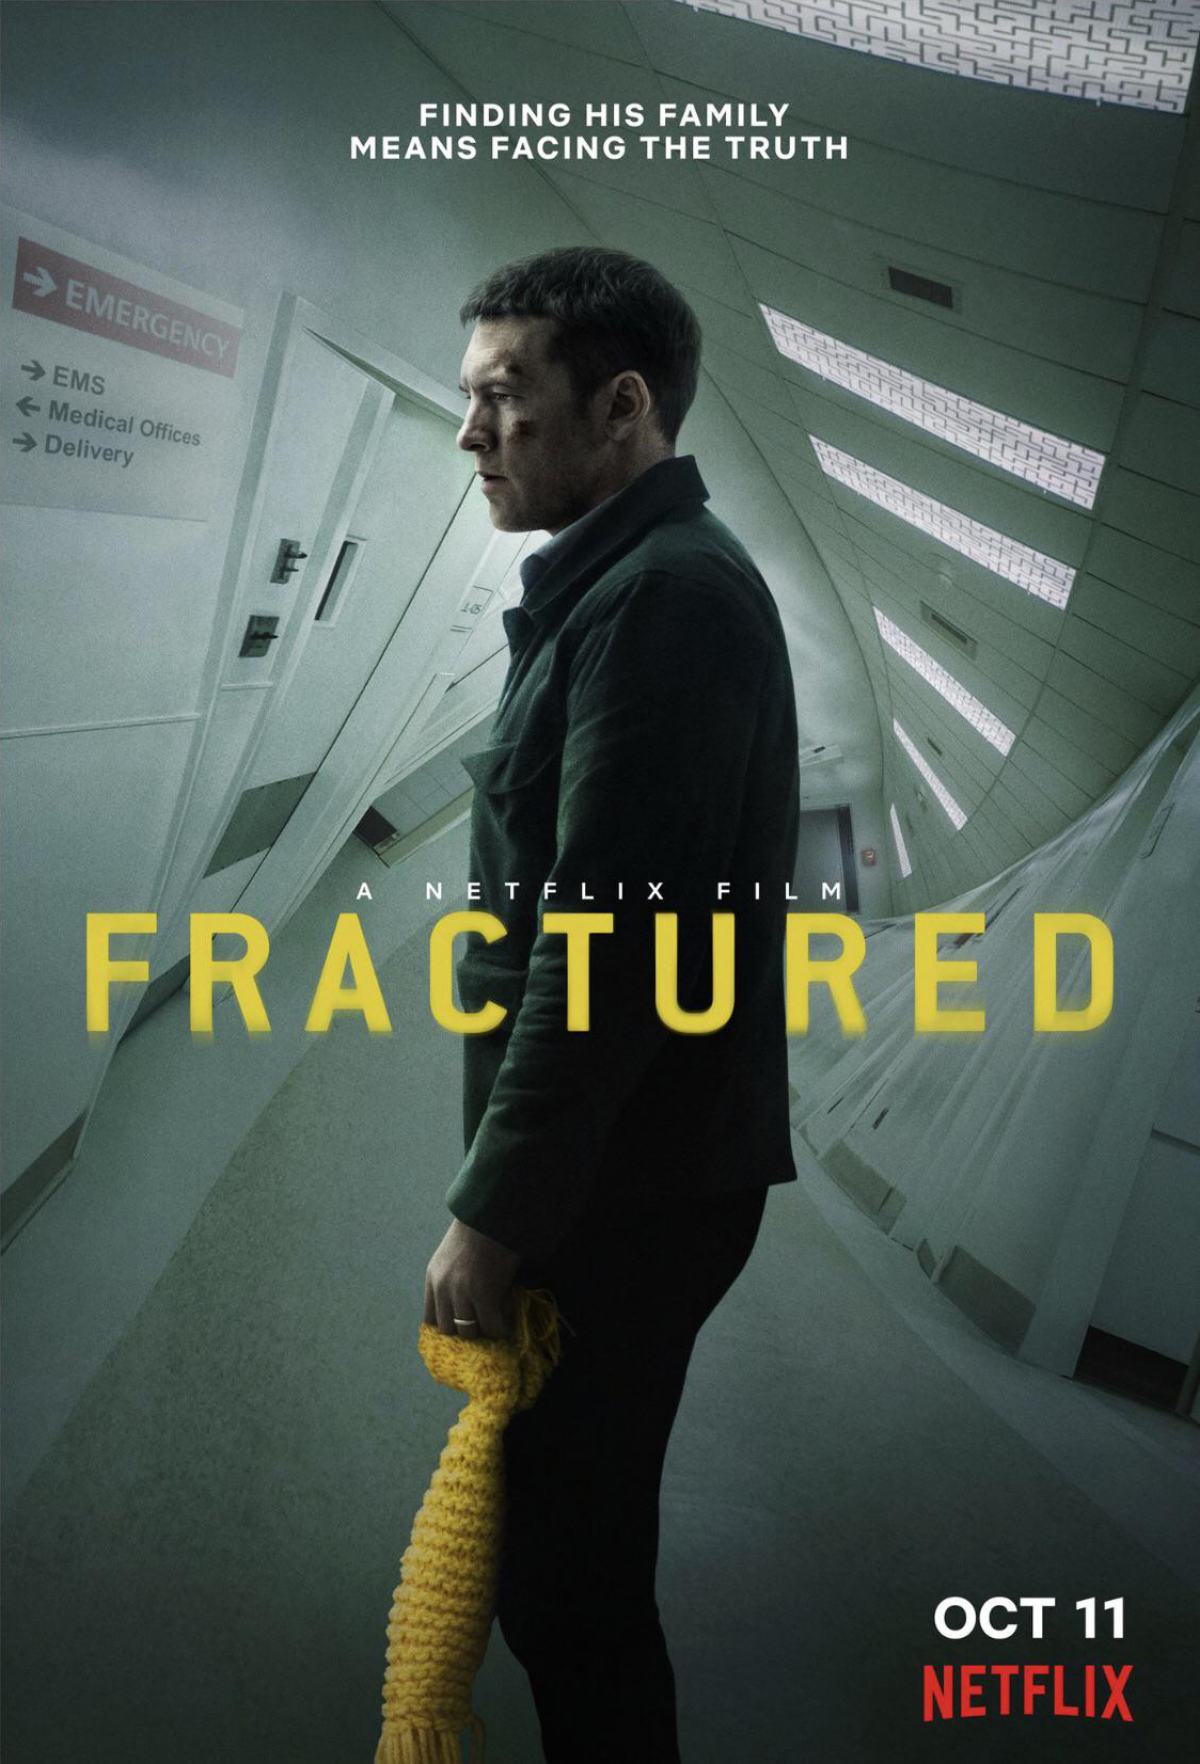 Fractured (2019) Poster #1 - Trailer Addict